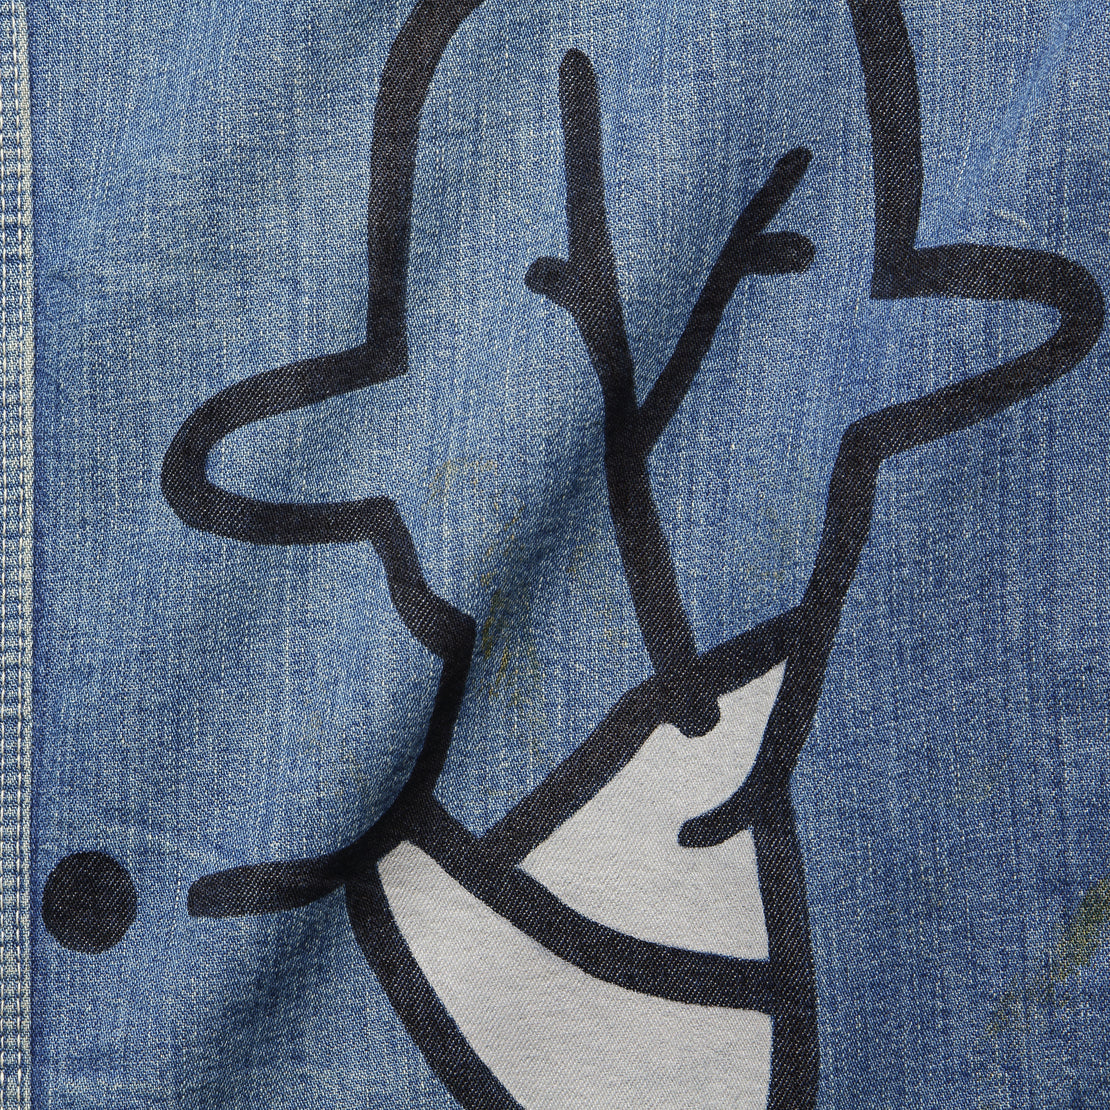 Vintage Lee Blanket-Lined Denim Chore Coat - Dot Constellation - Tom Jean Webb - STAG Provisions - One & Done - Apparel